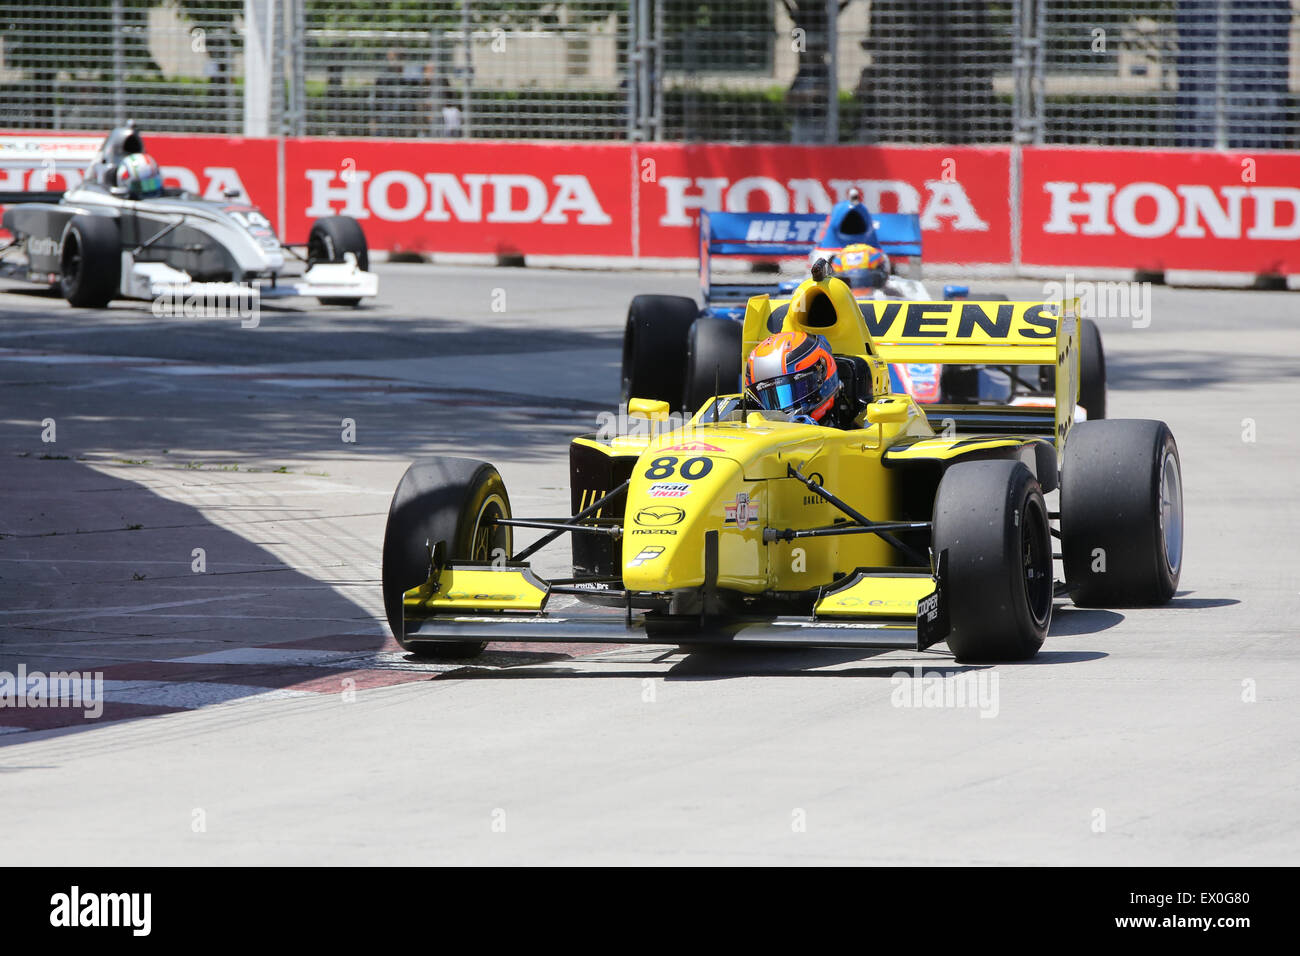 Honda Indy Car racing event Foto Stock